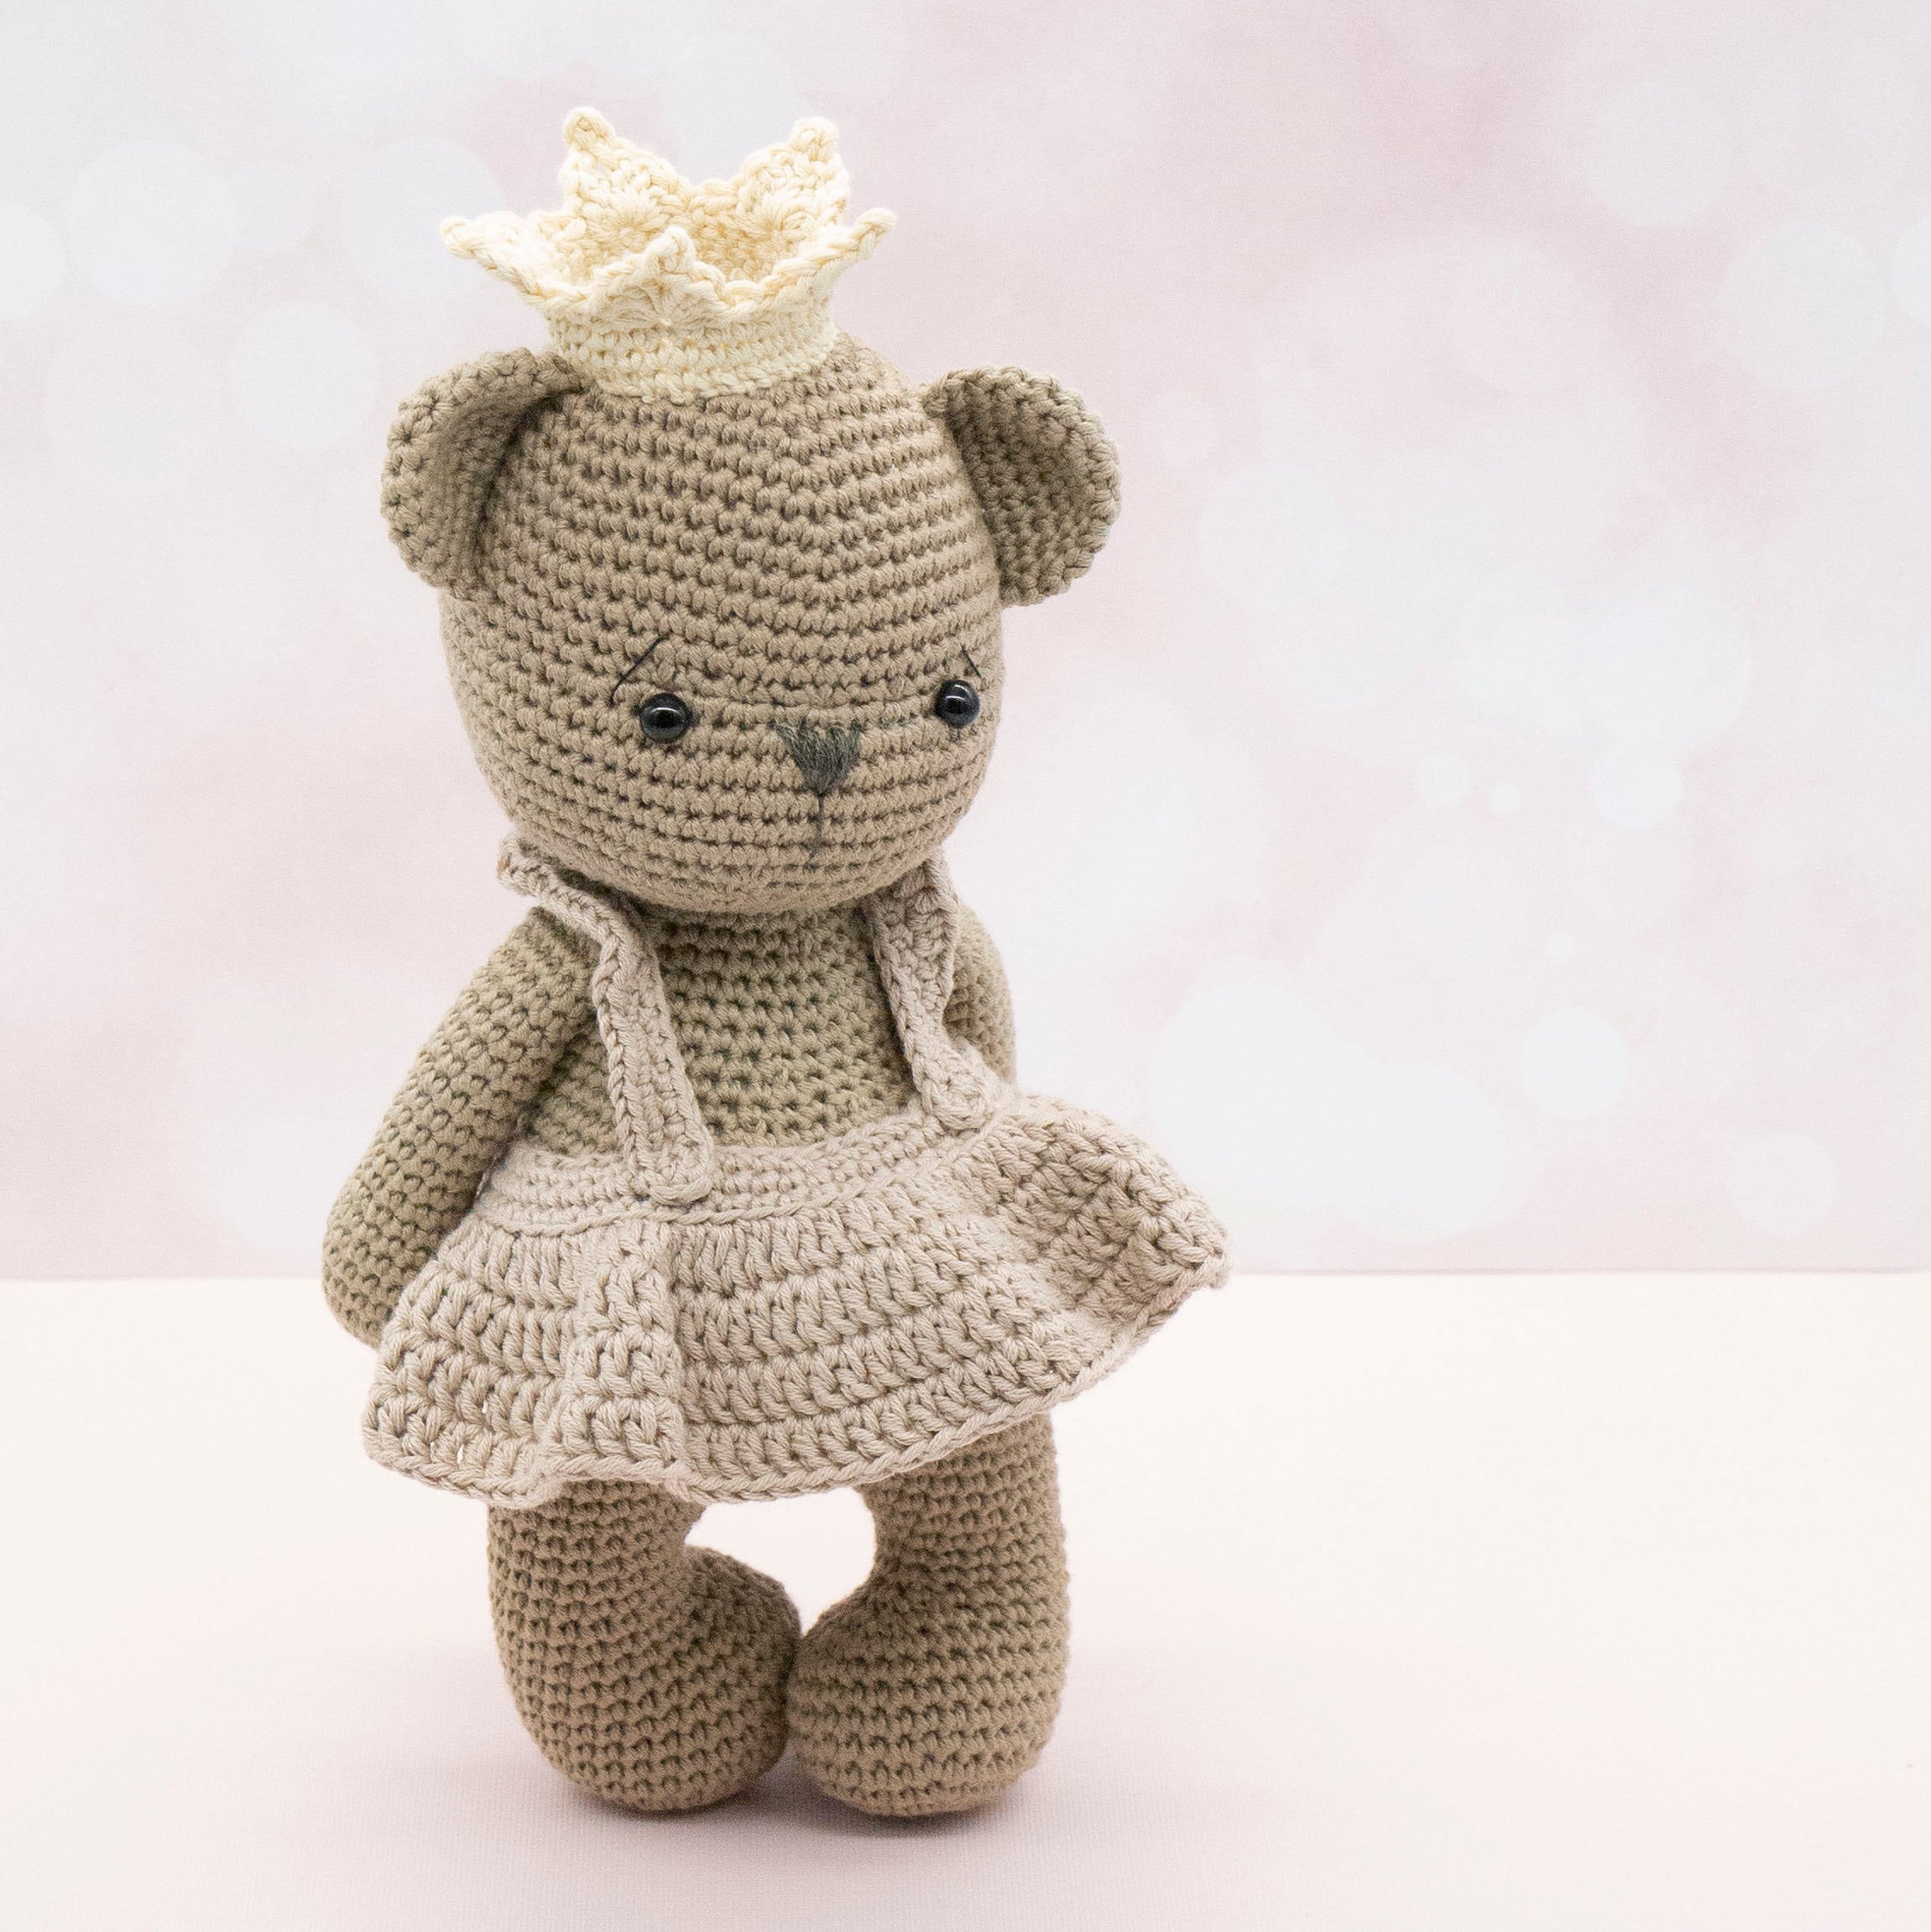 Amigurumi Crochet Pattern Honey the Bunny Rabbit Doll ENGLISH ONLY 